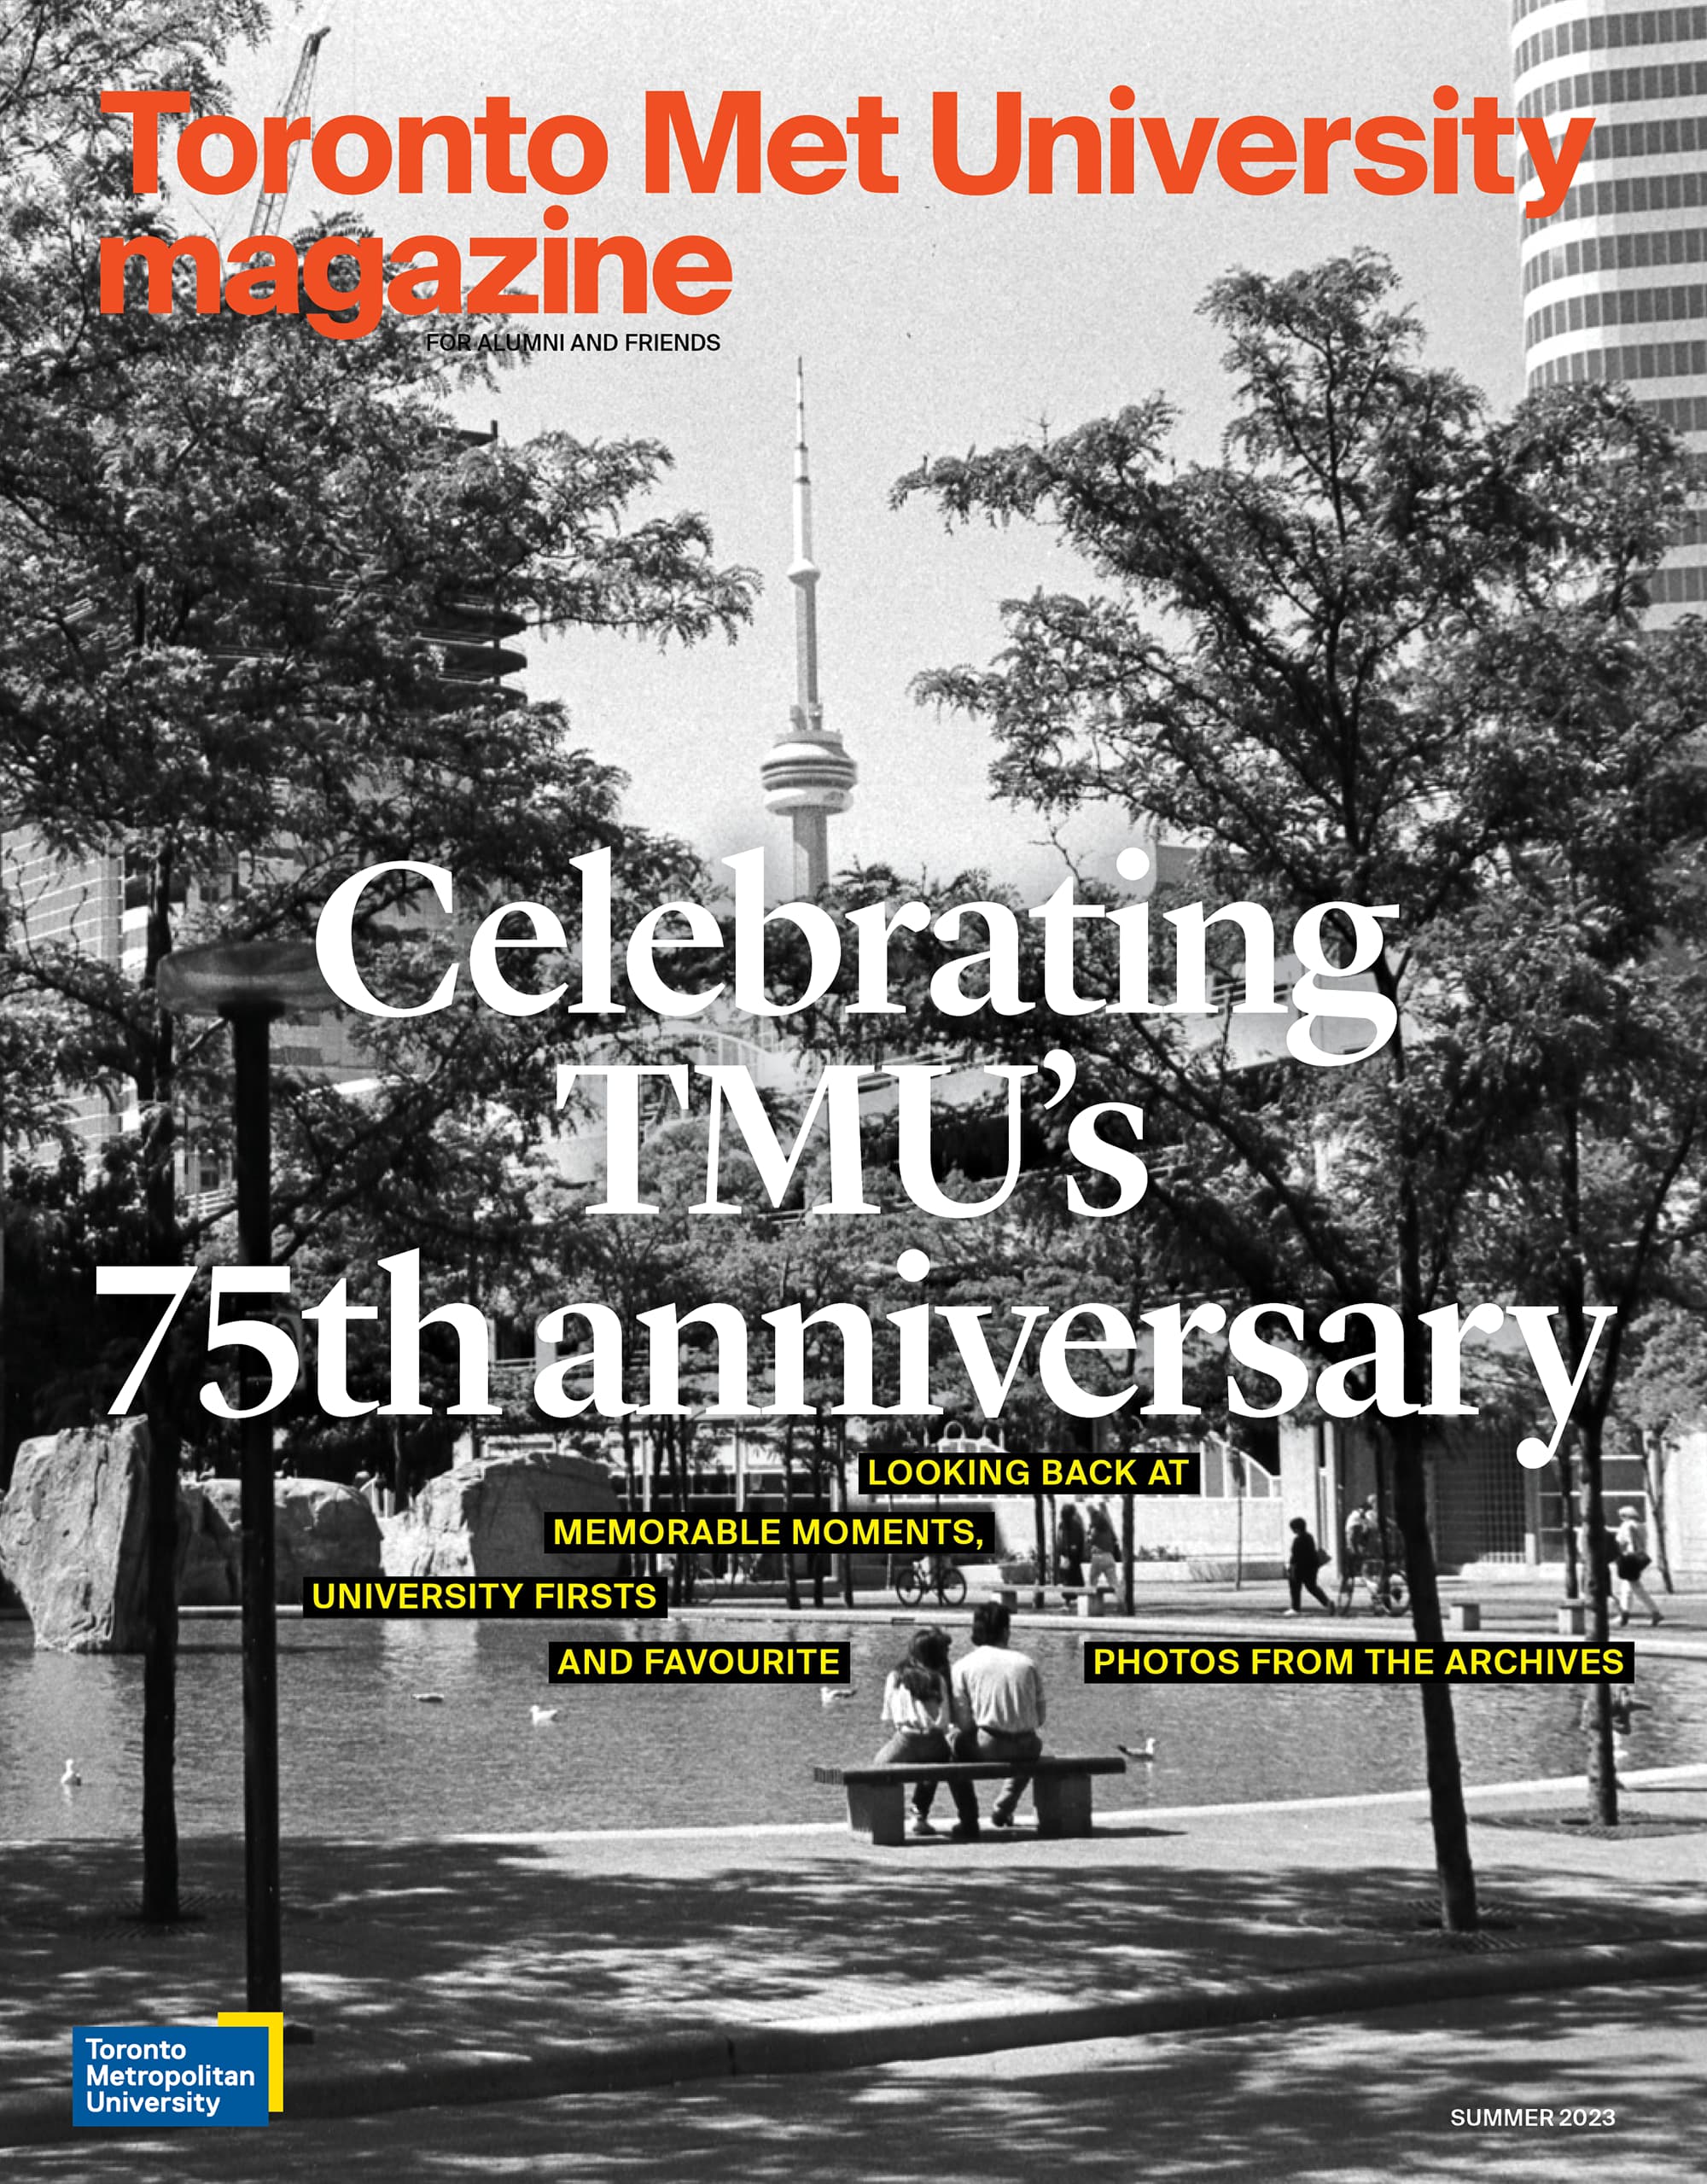 The Summer 2023 issue of Toronto Met University Magazine.